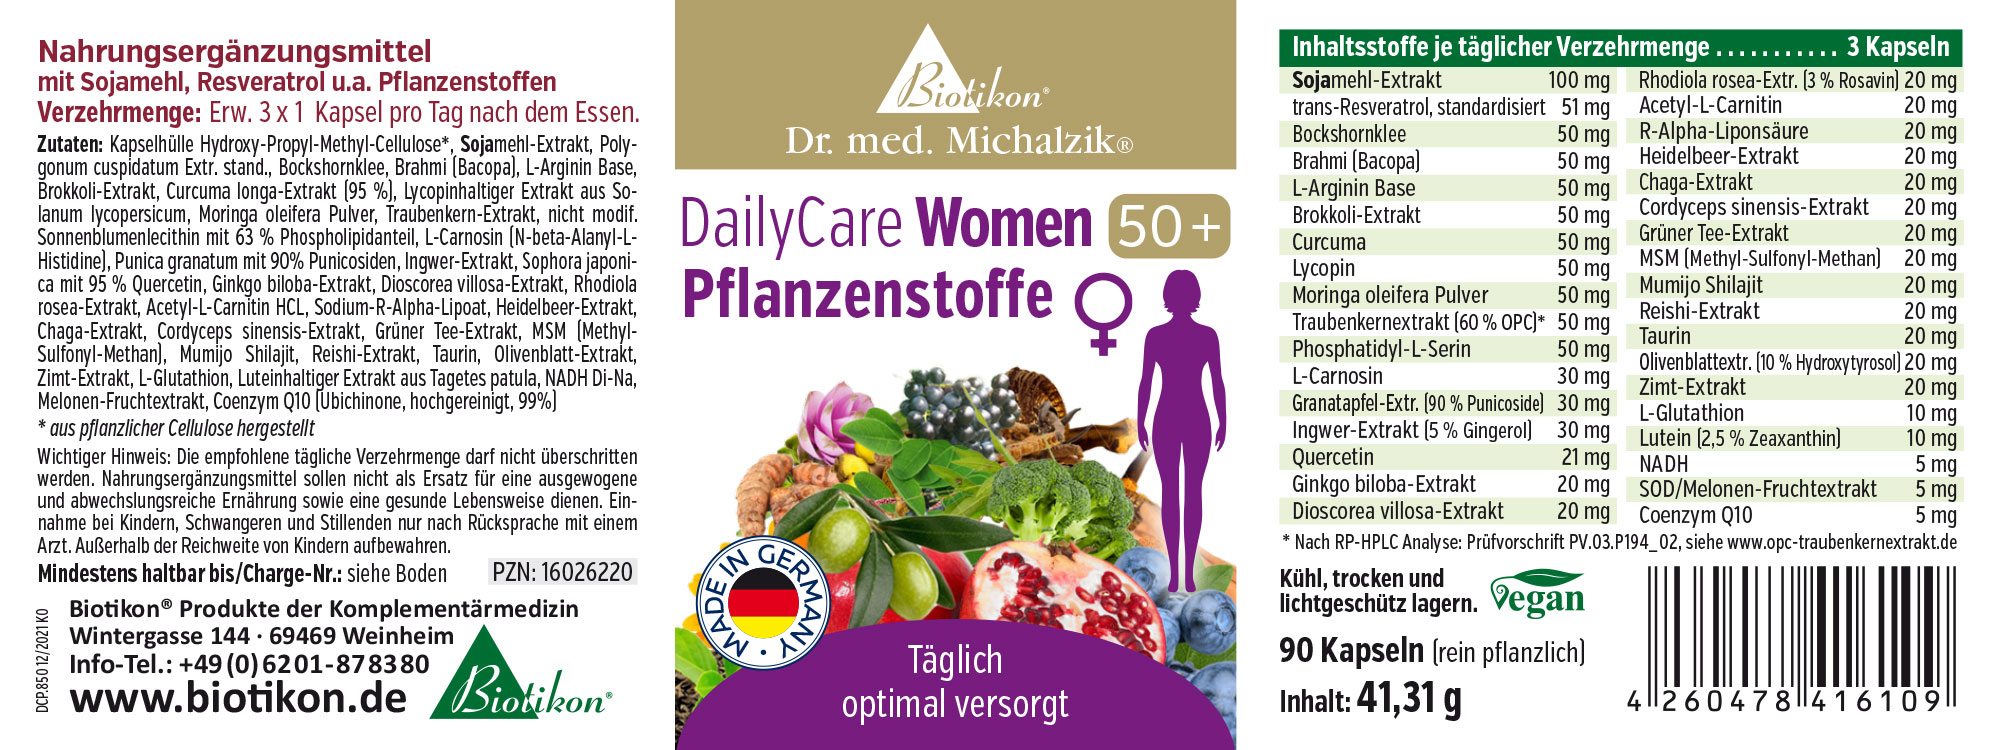 DailyCare Women 50+ Pflanzenstoffe